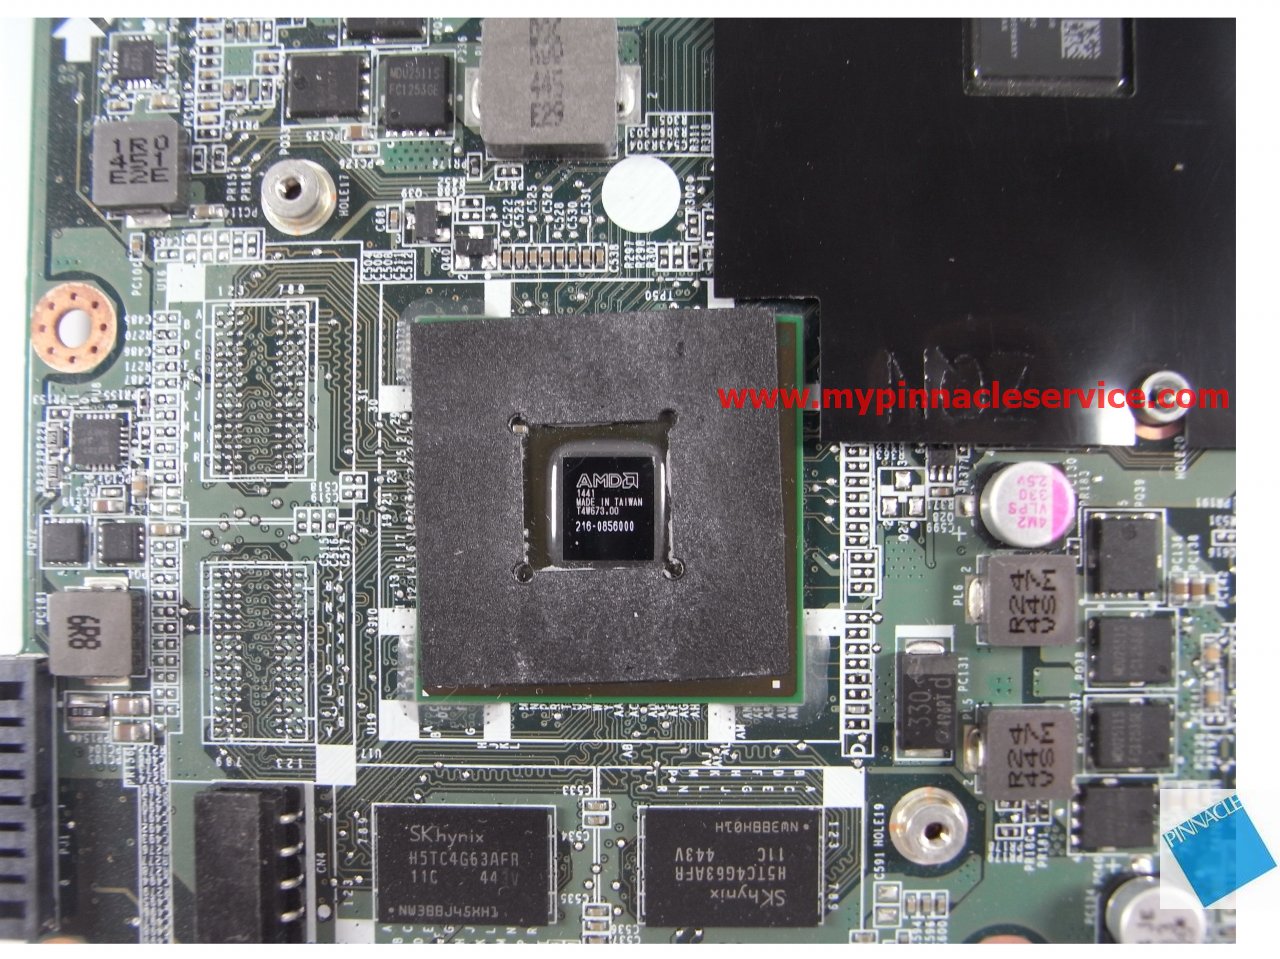 mbmnq11003-motherboard-for-acer-aspire-e5-421g-da0zqnmb6d0-zqn-rimg0024-mbmnq11003.jpg